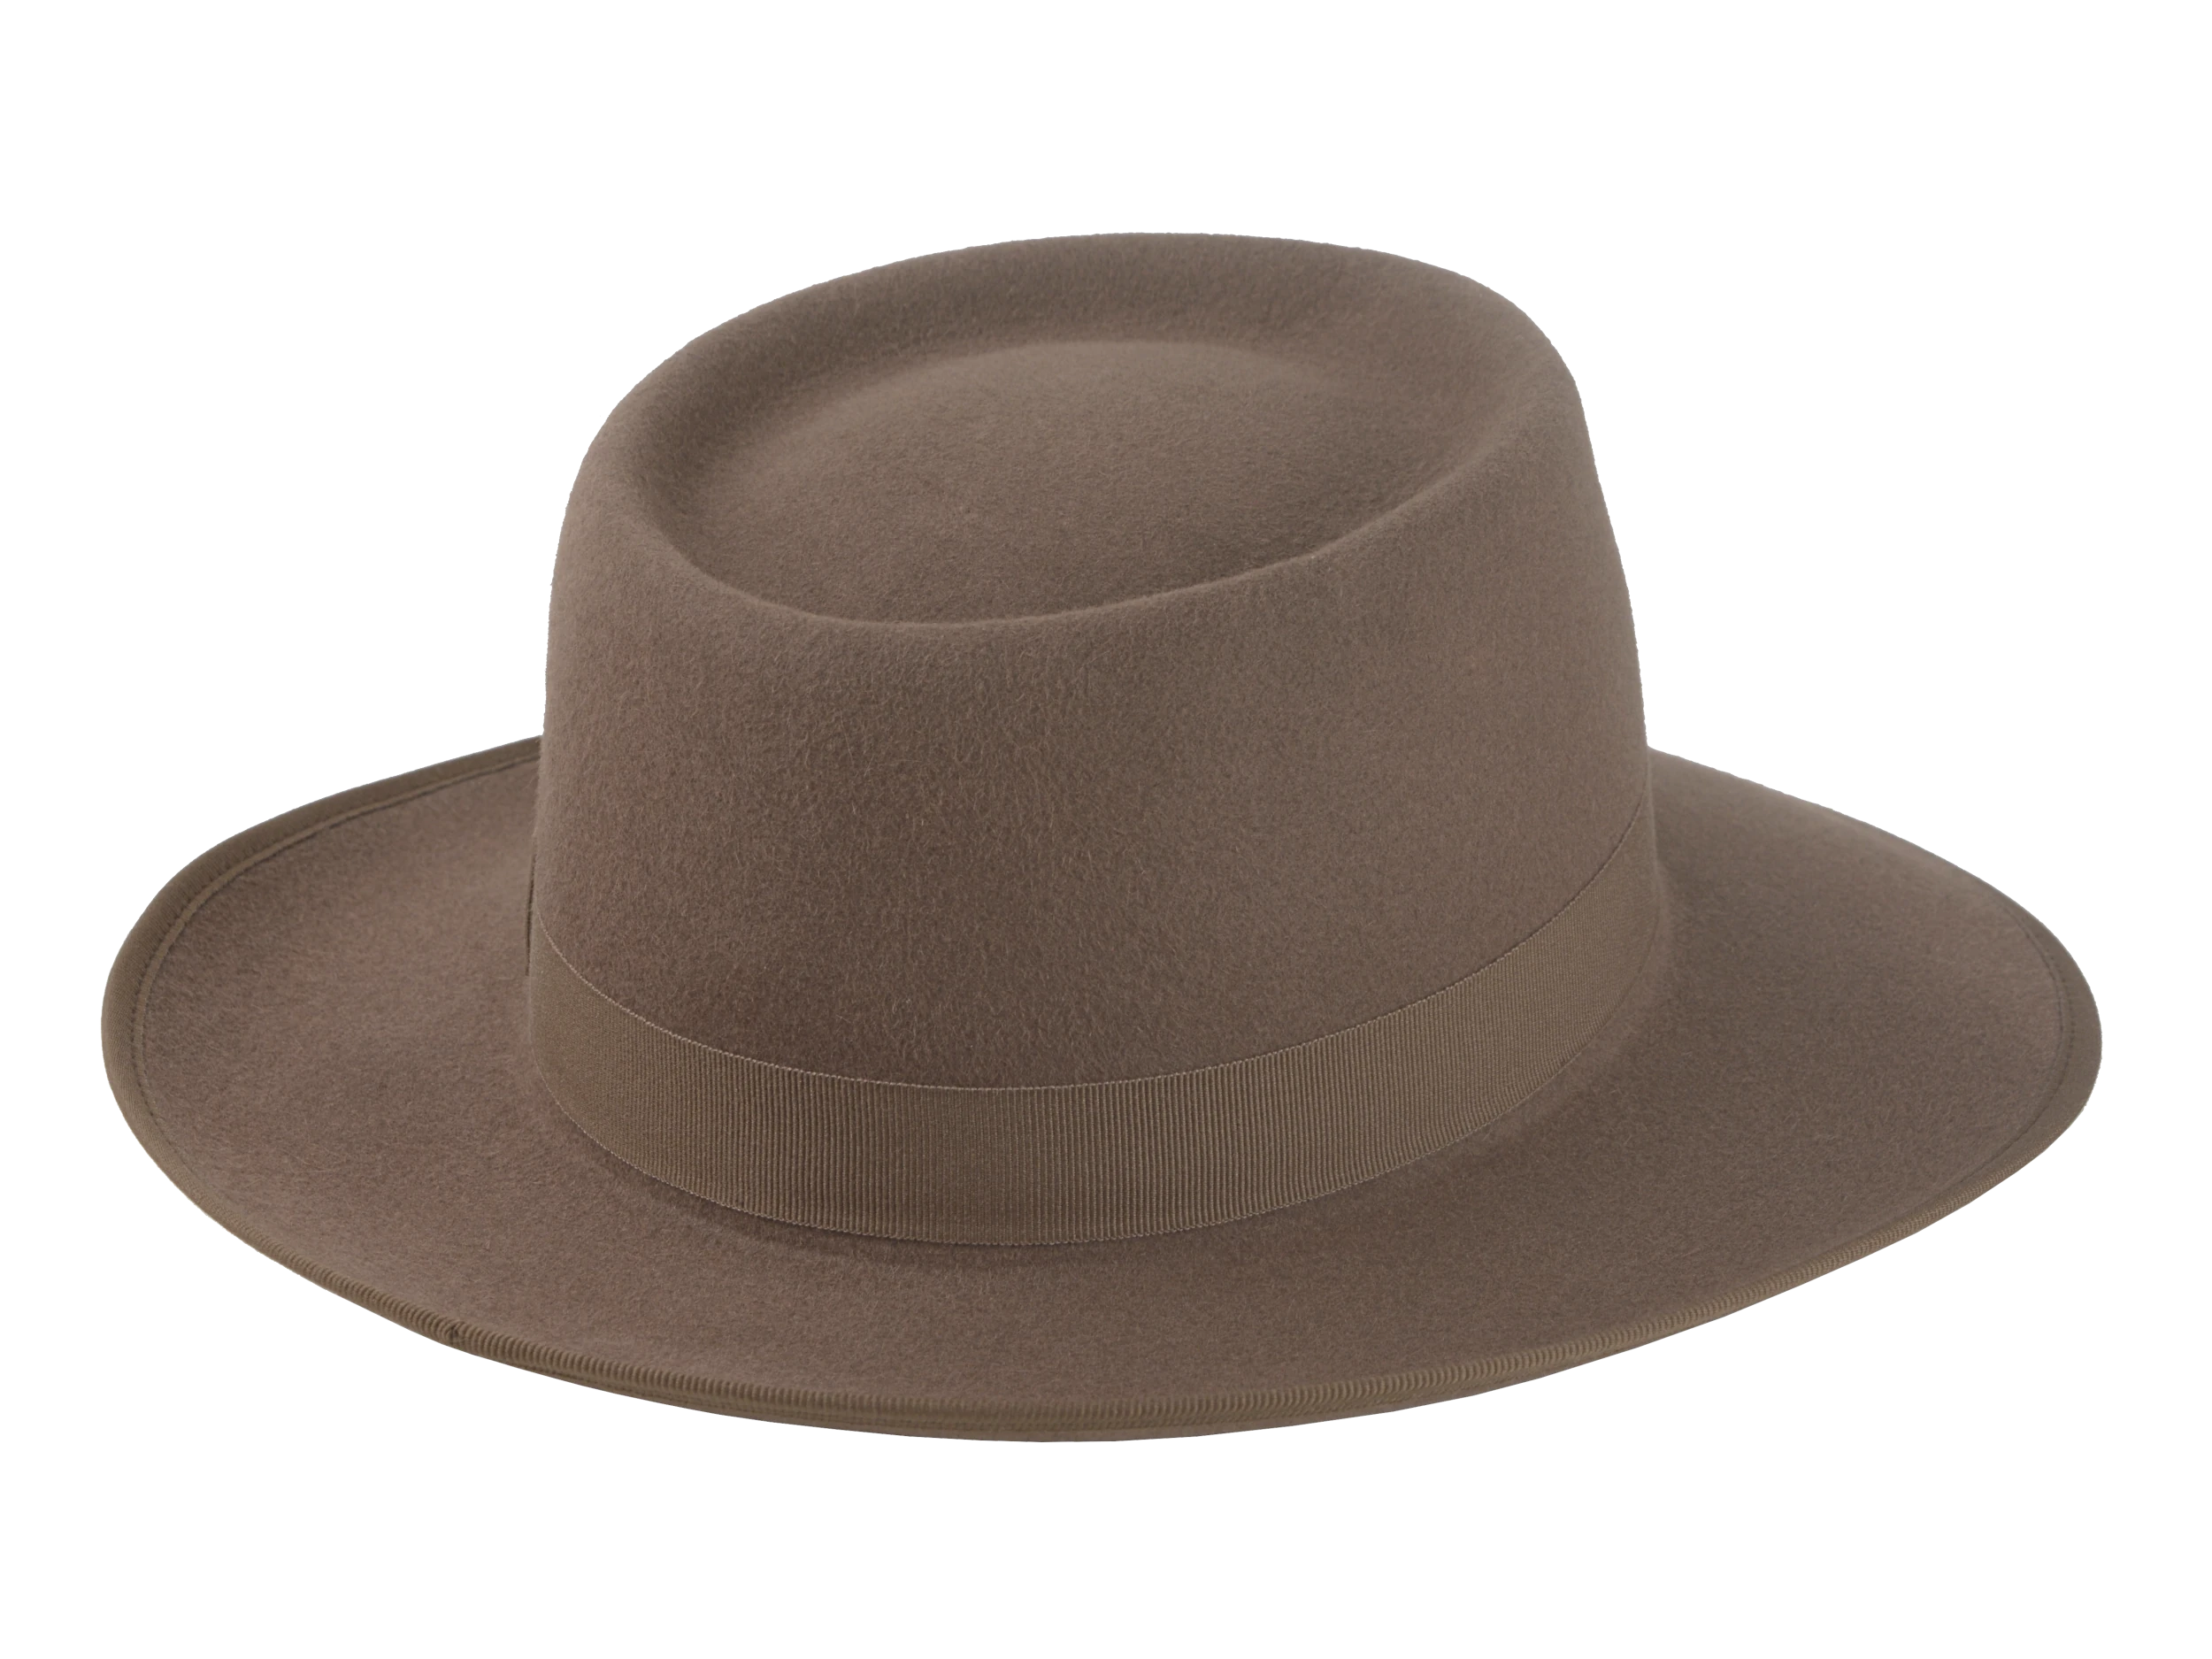 The Oppenheimer - Rabbit Fur Felt Wide Brim Porkpie Fedora For Men in Desert Taupe Brown Color | Agnoulita Quality Custom Hats 4